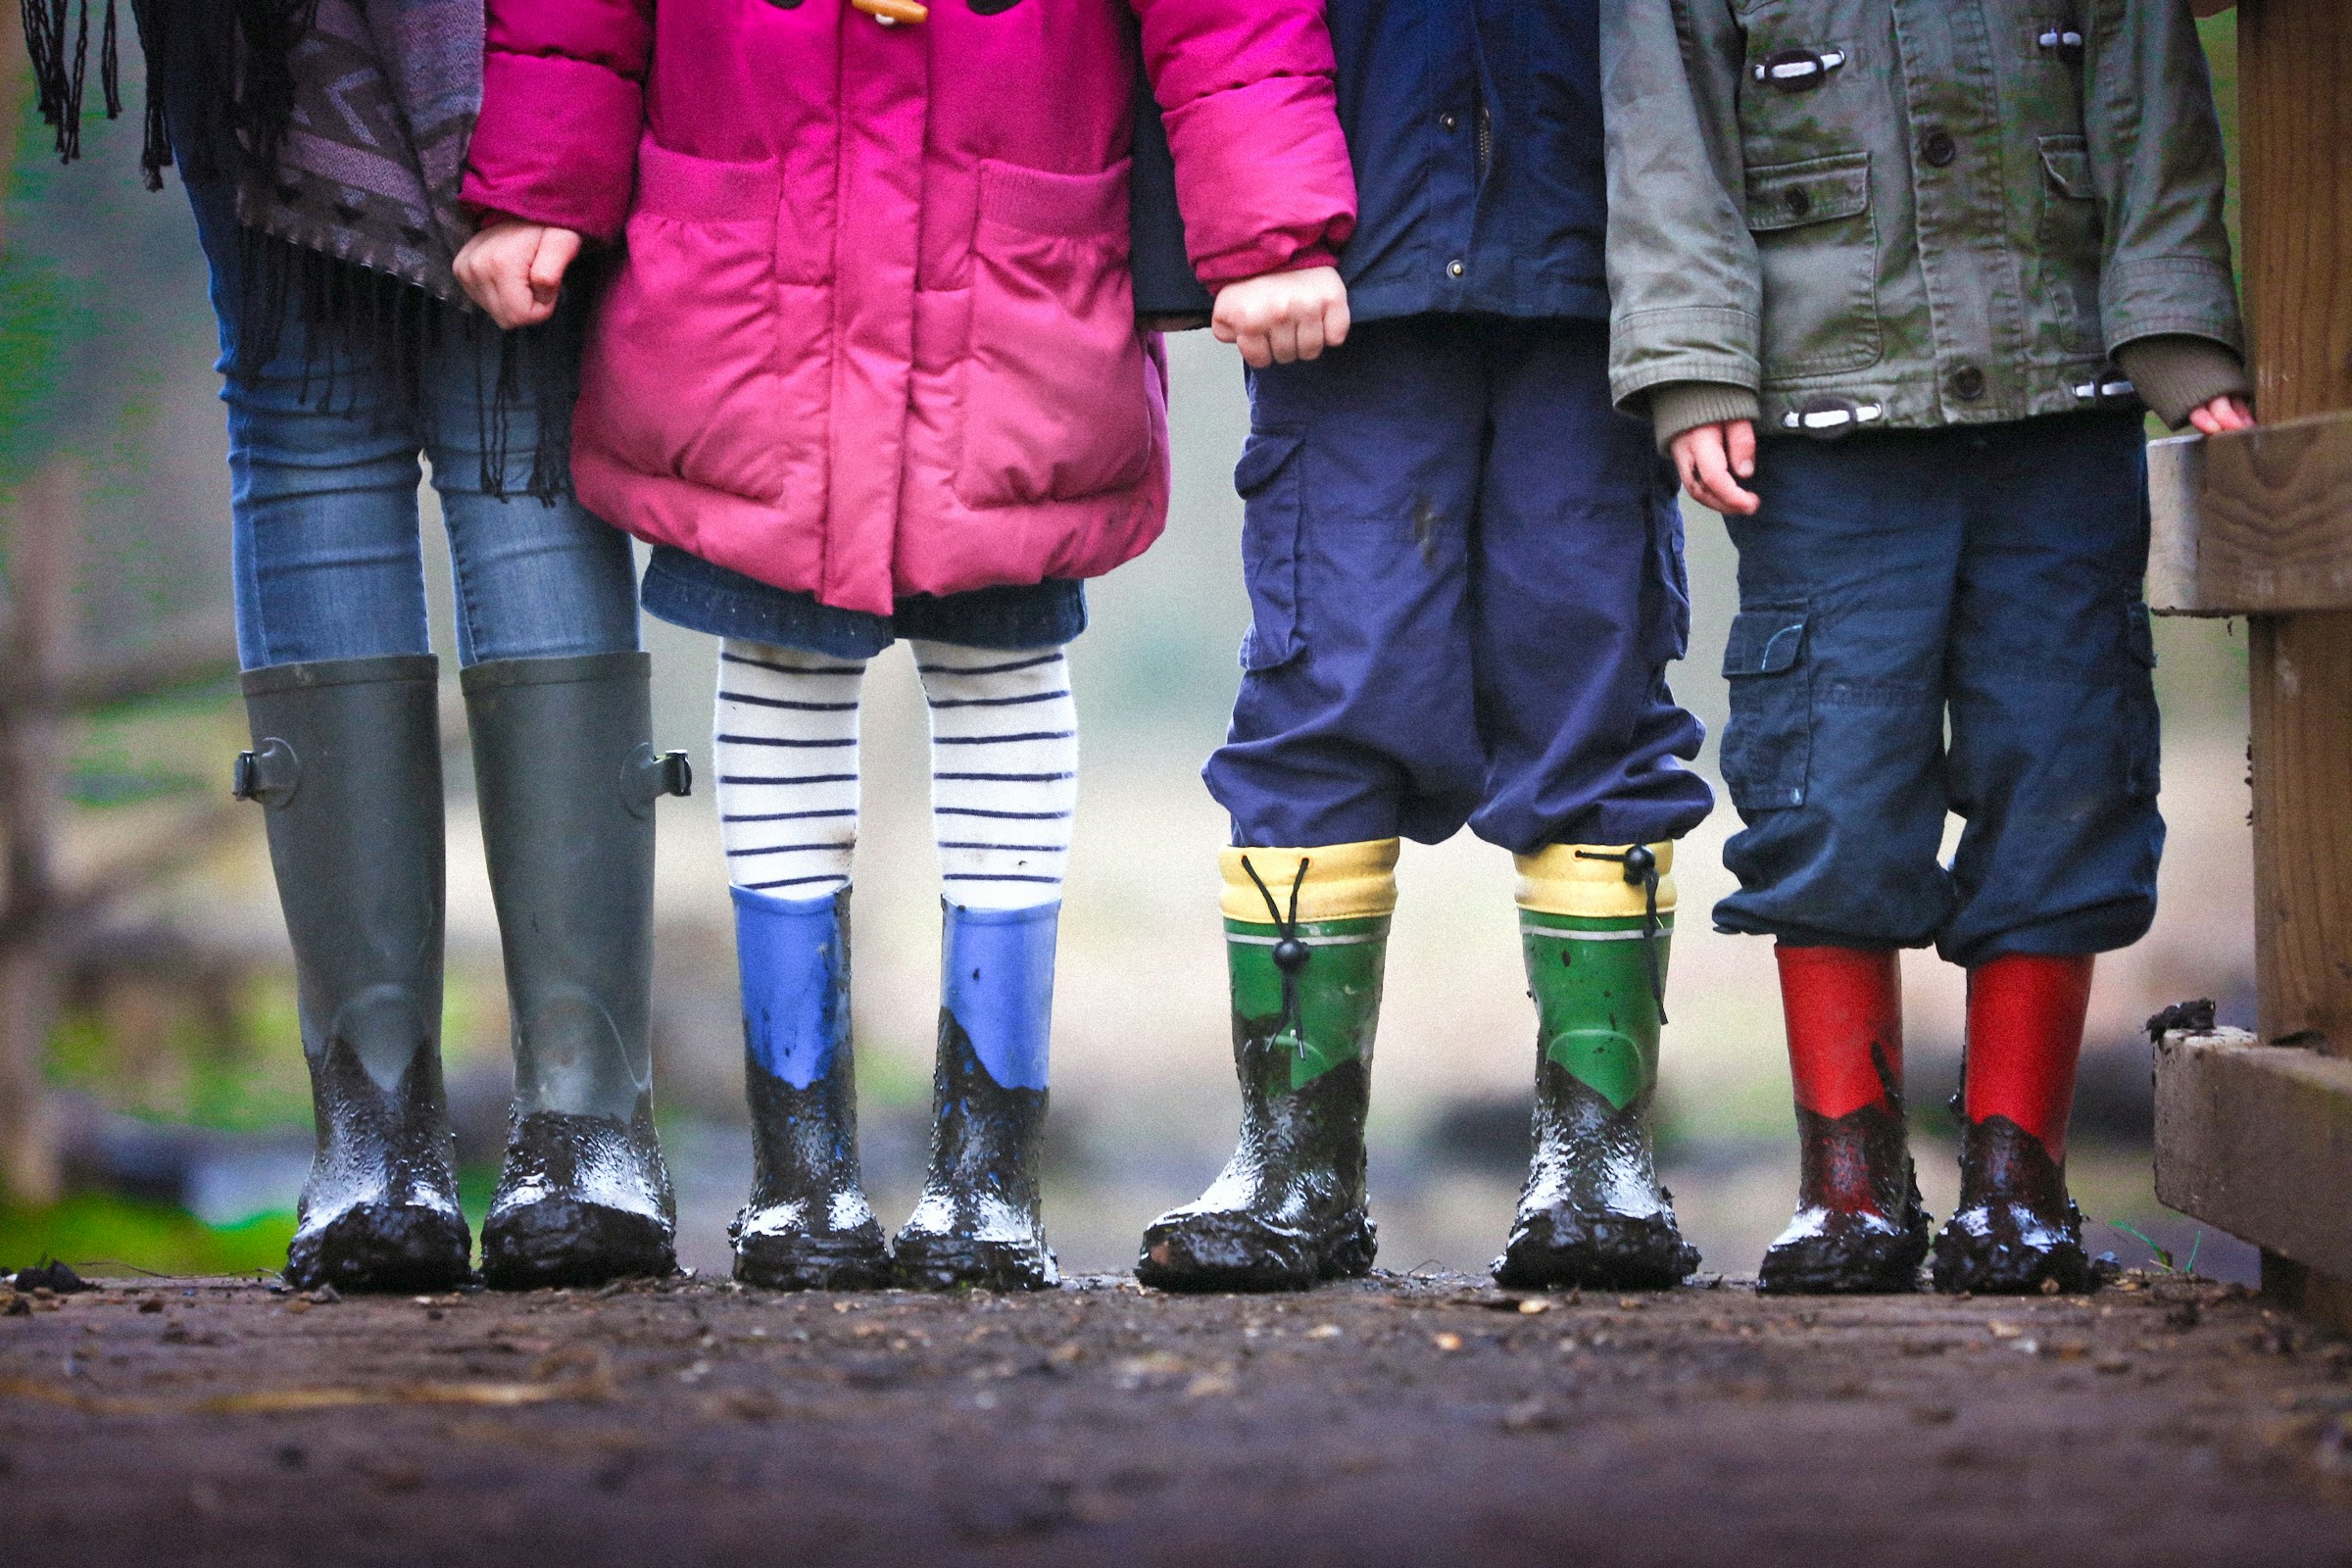 Children standing together in the rain | Source: Unsplash